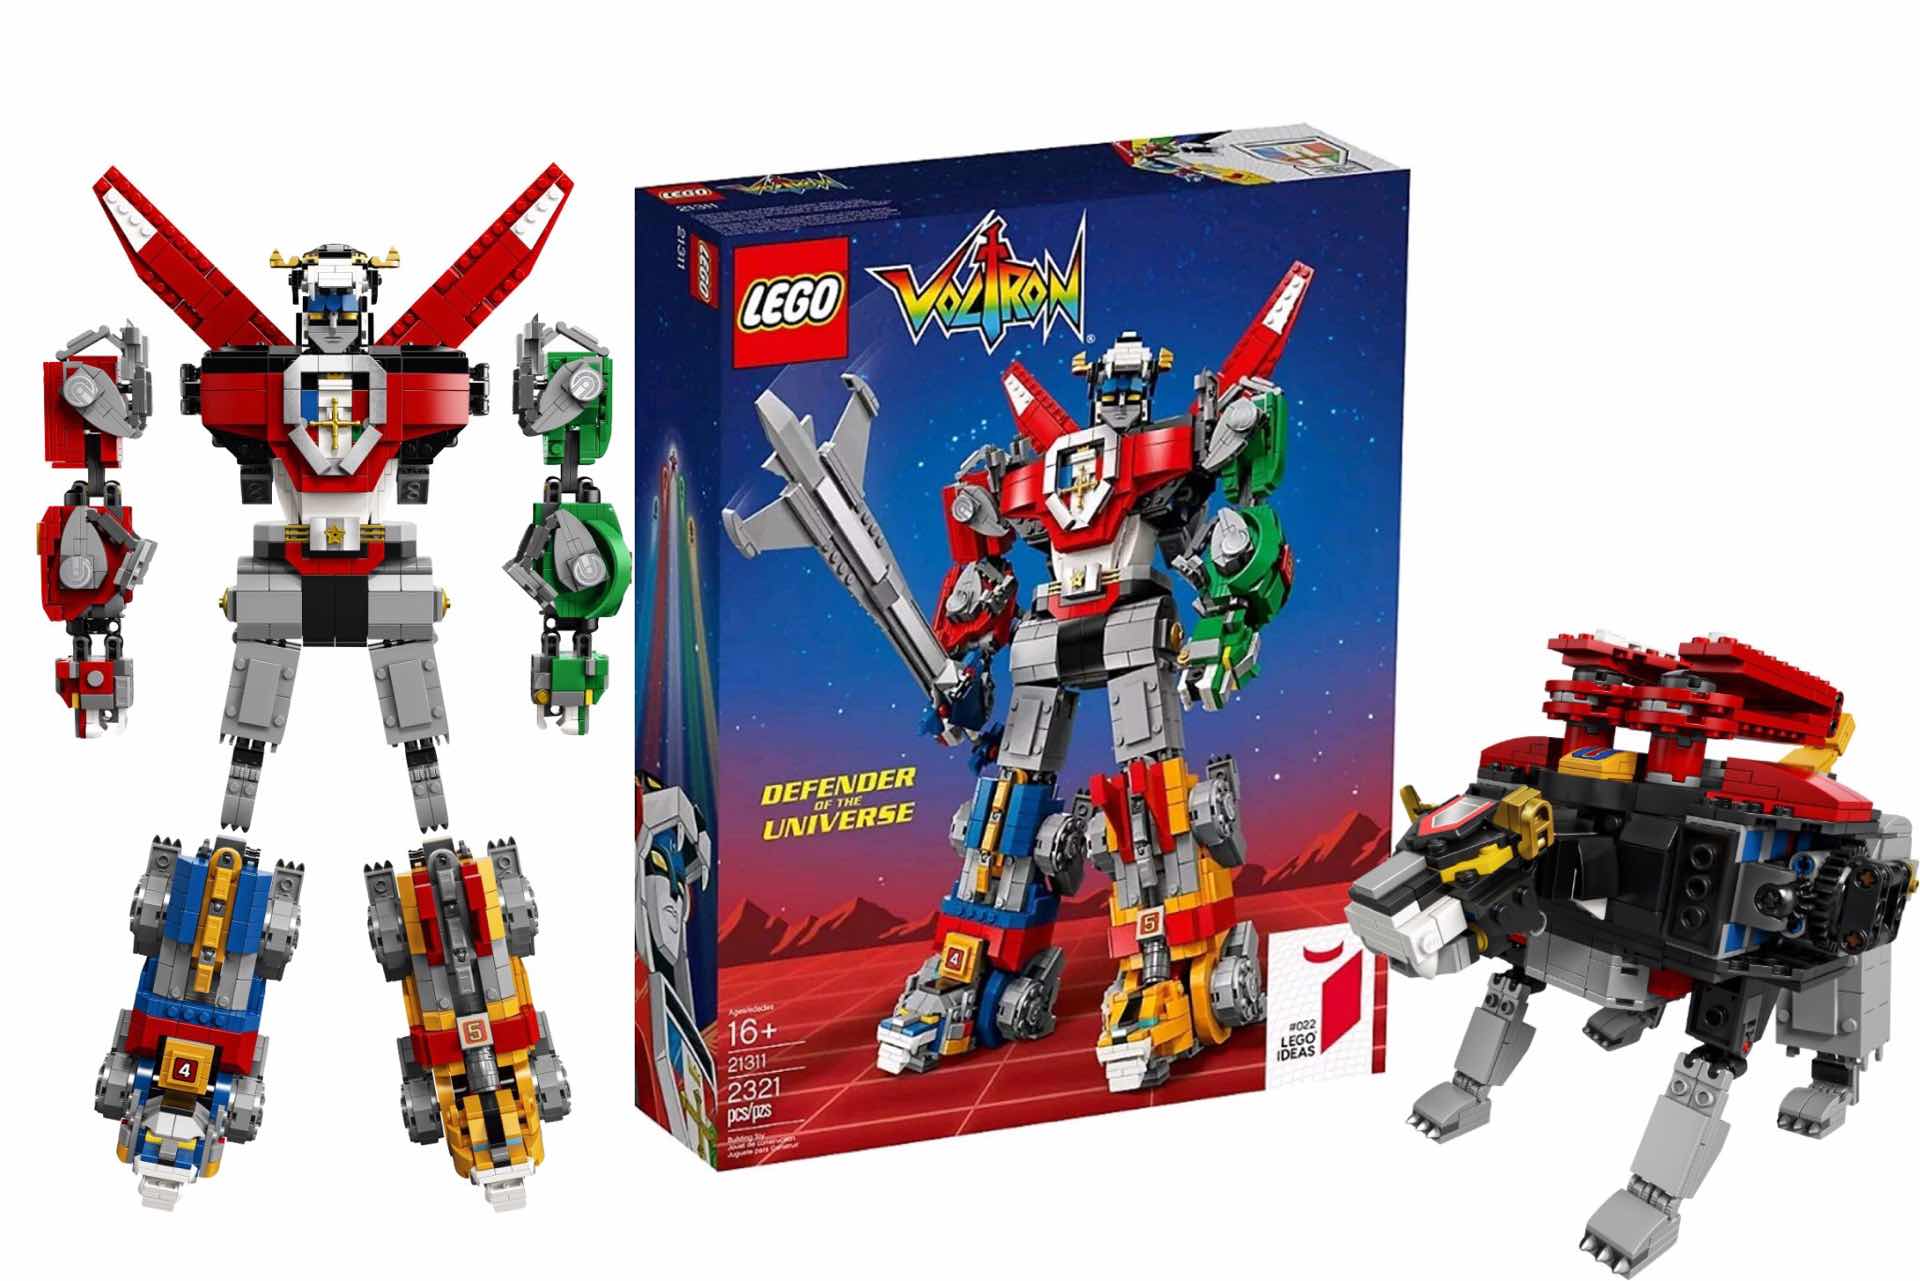 LEGO Ideas Voltron set. ($180)